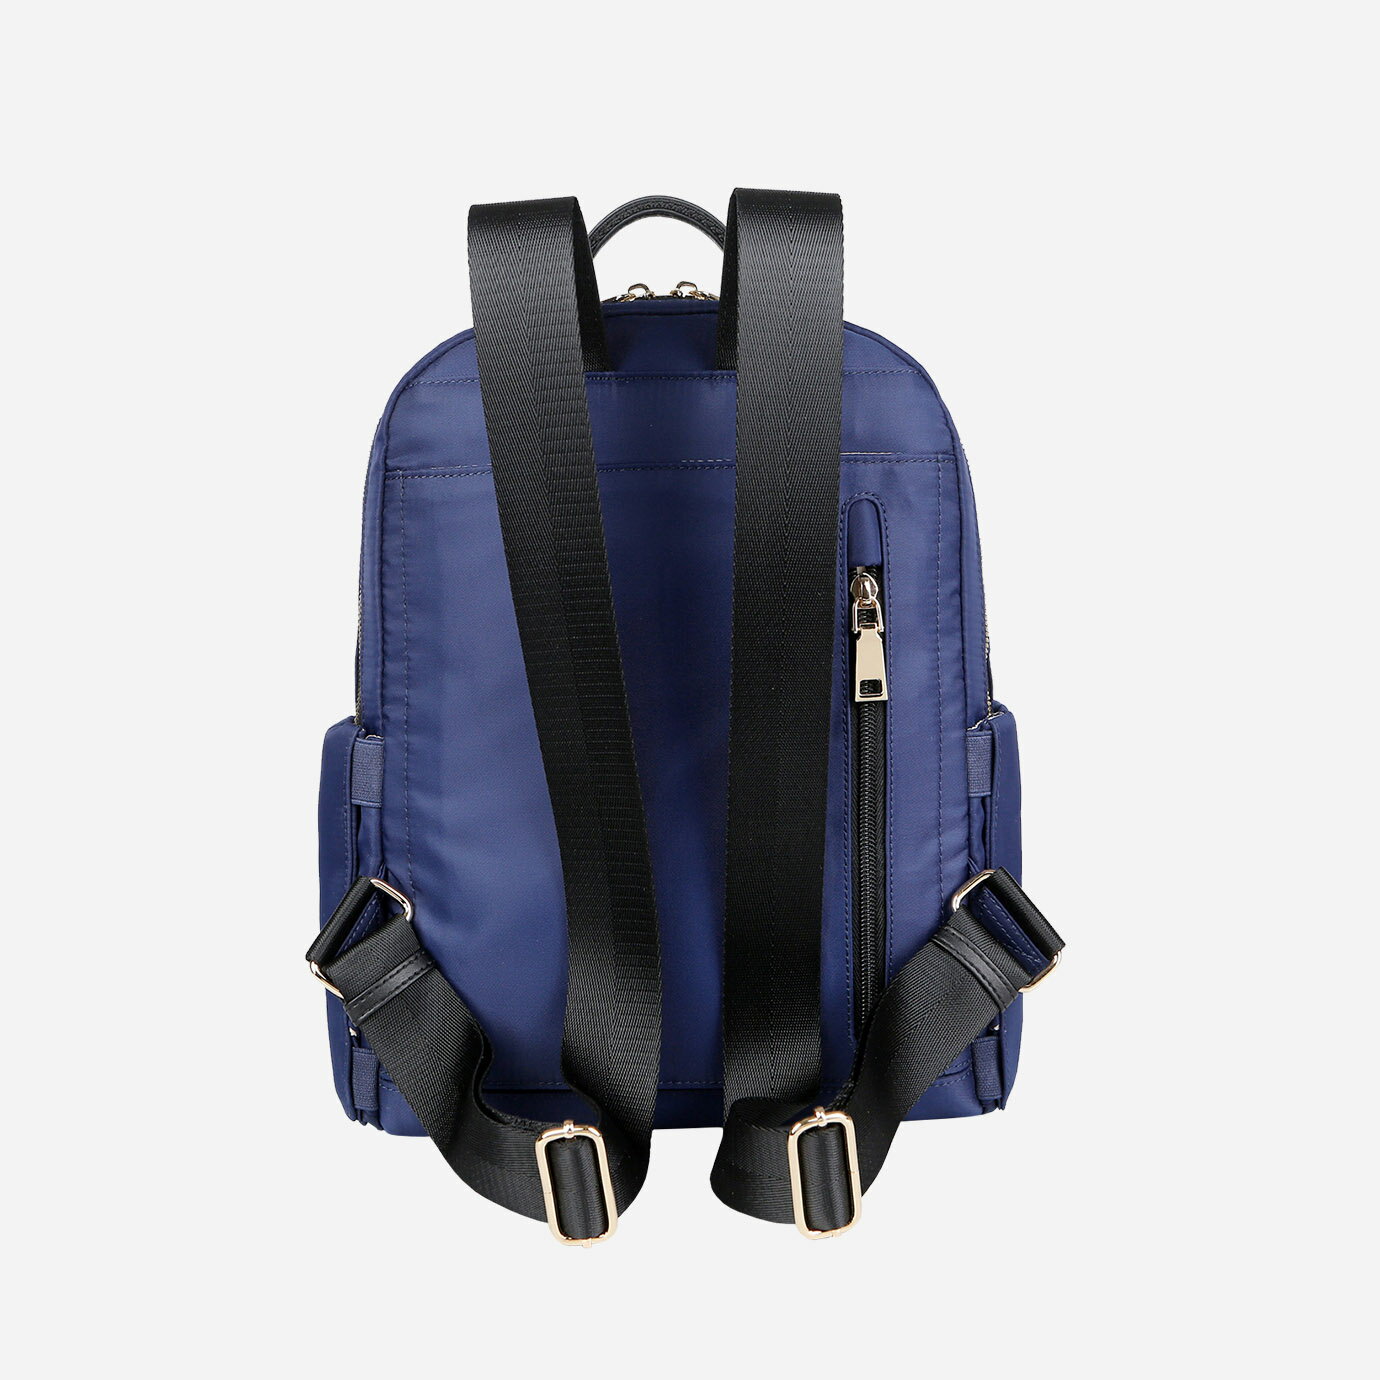 Nordace Ellie Mini- 後背包 充電雙肩包 雙肩包 筆電包 電腦包 旅行包 休閒包 防水背包 7色可選-藍色 6